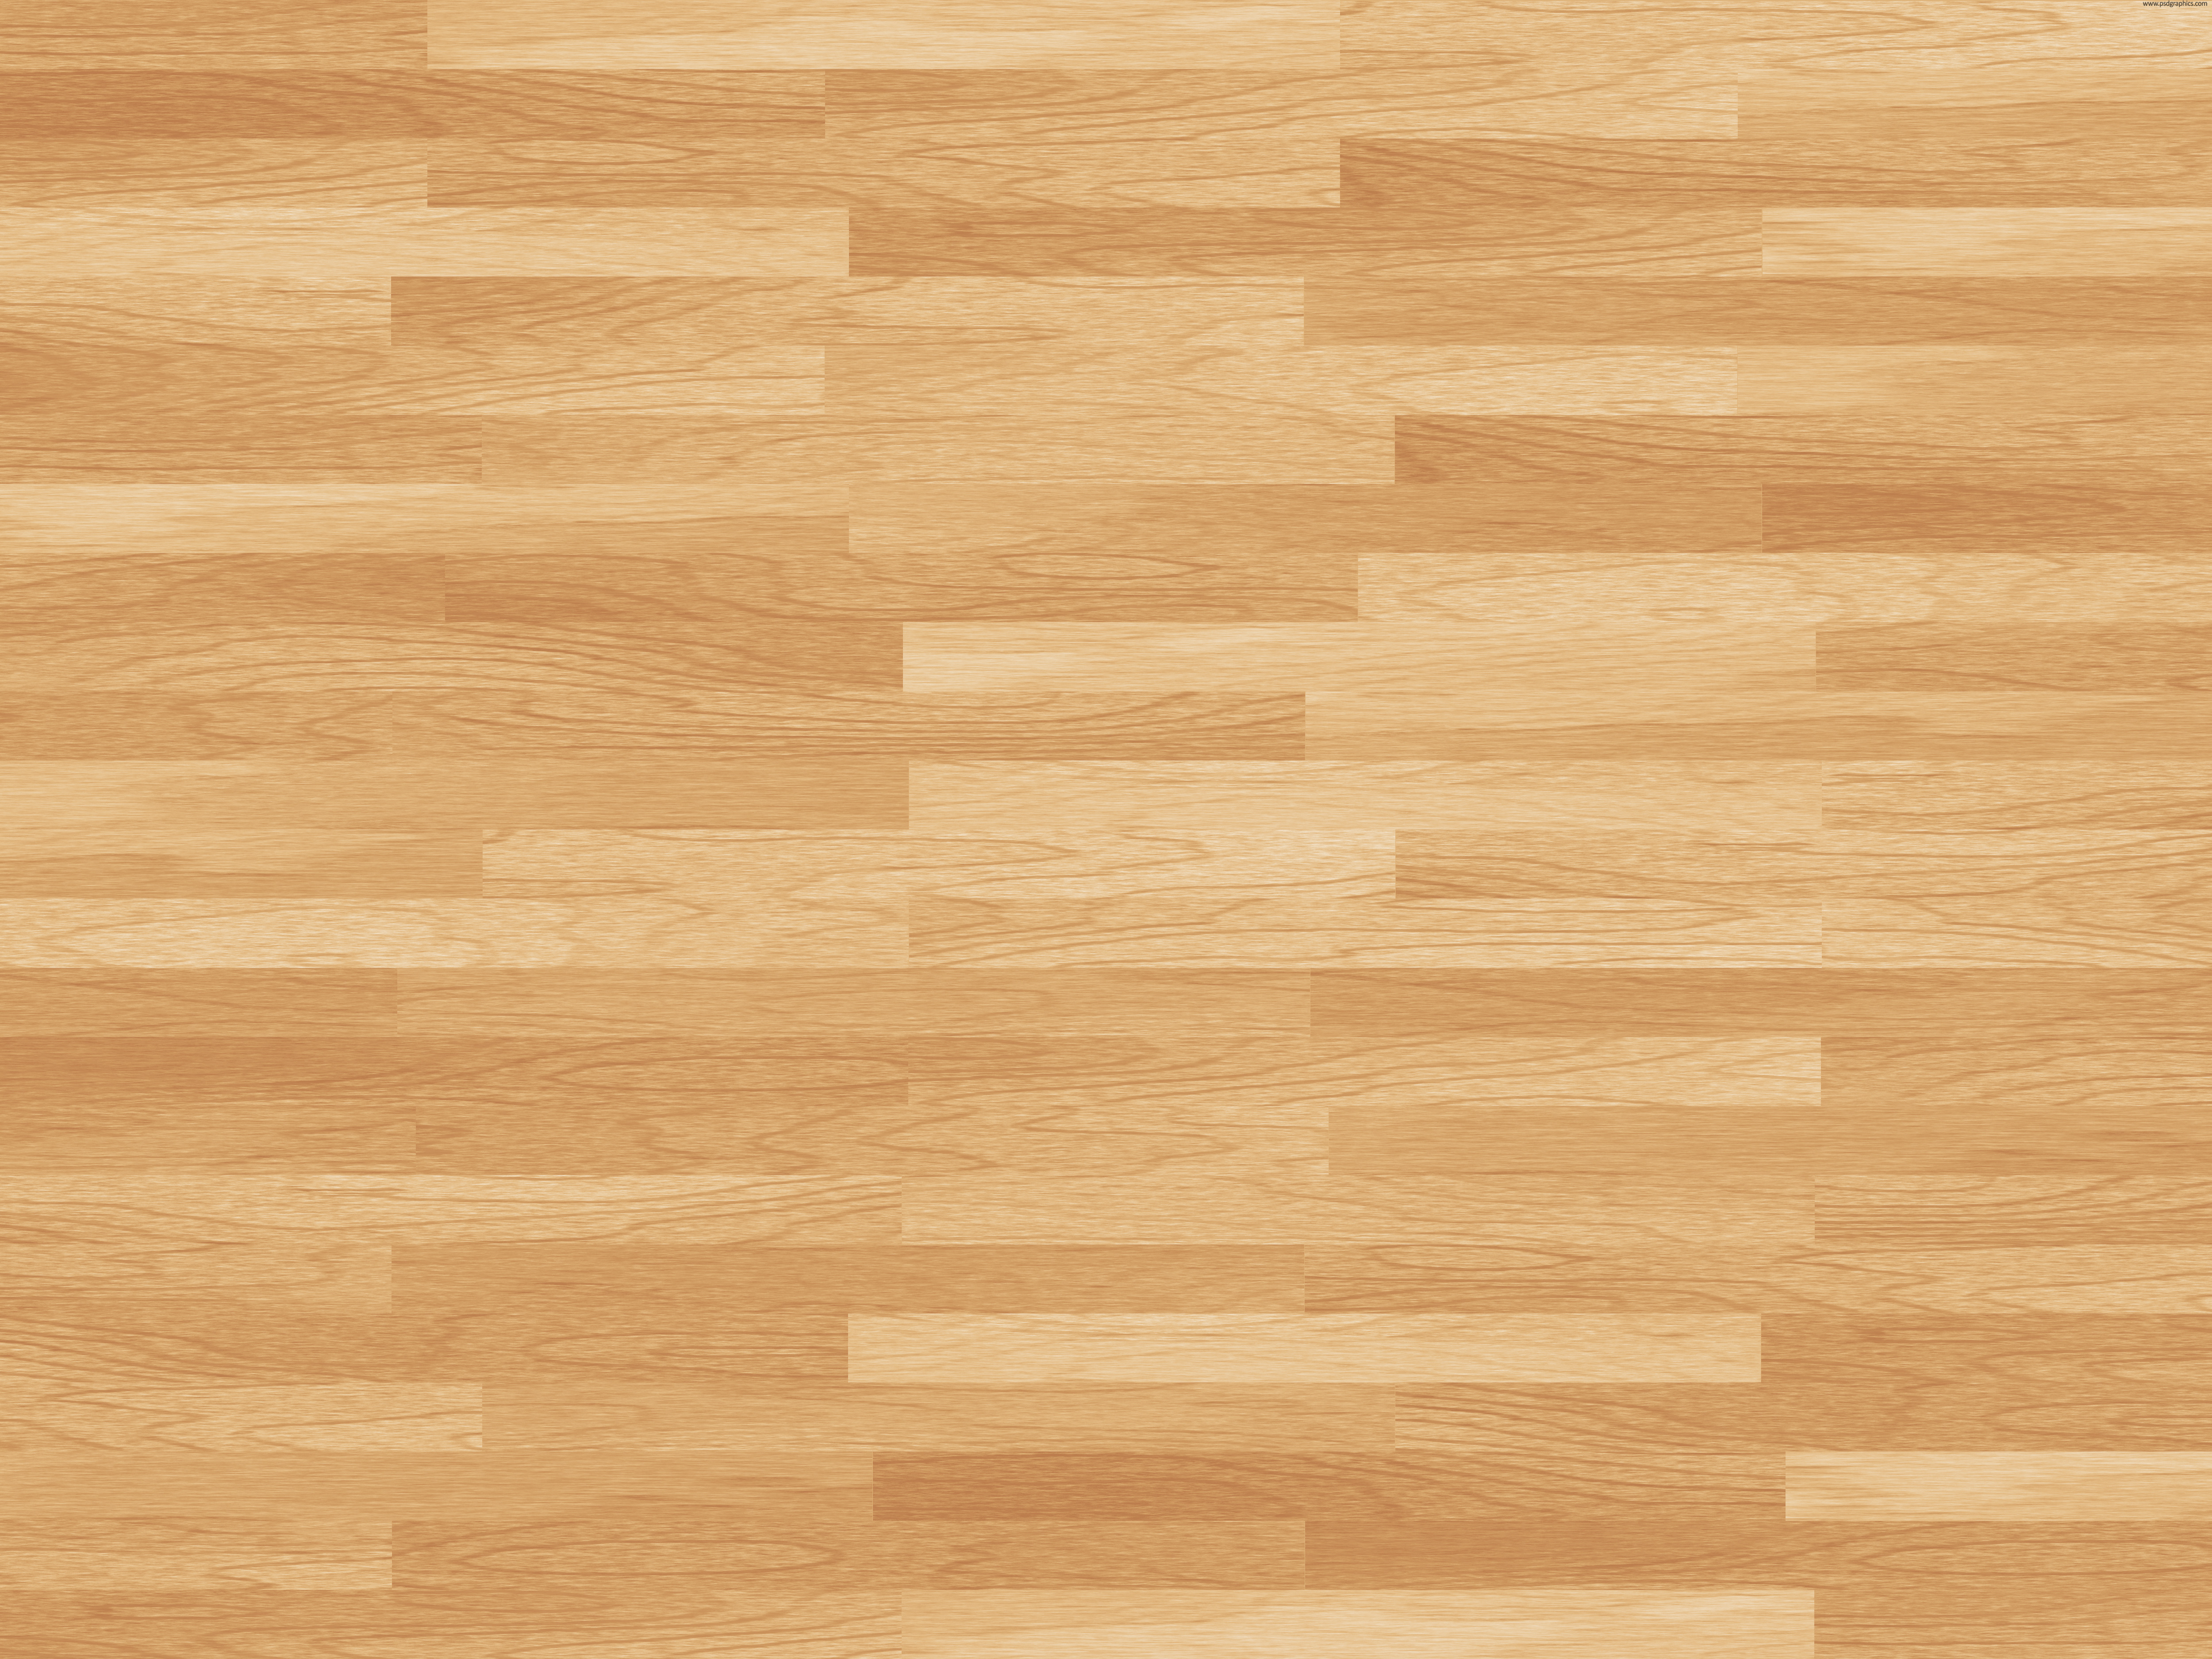 Basketball Floor Texture Psdgraphics